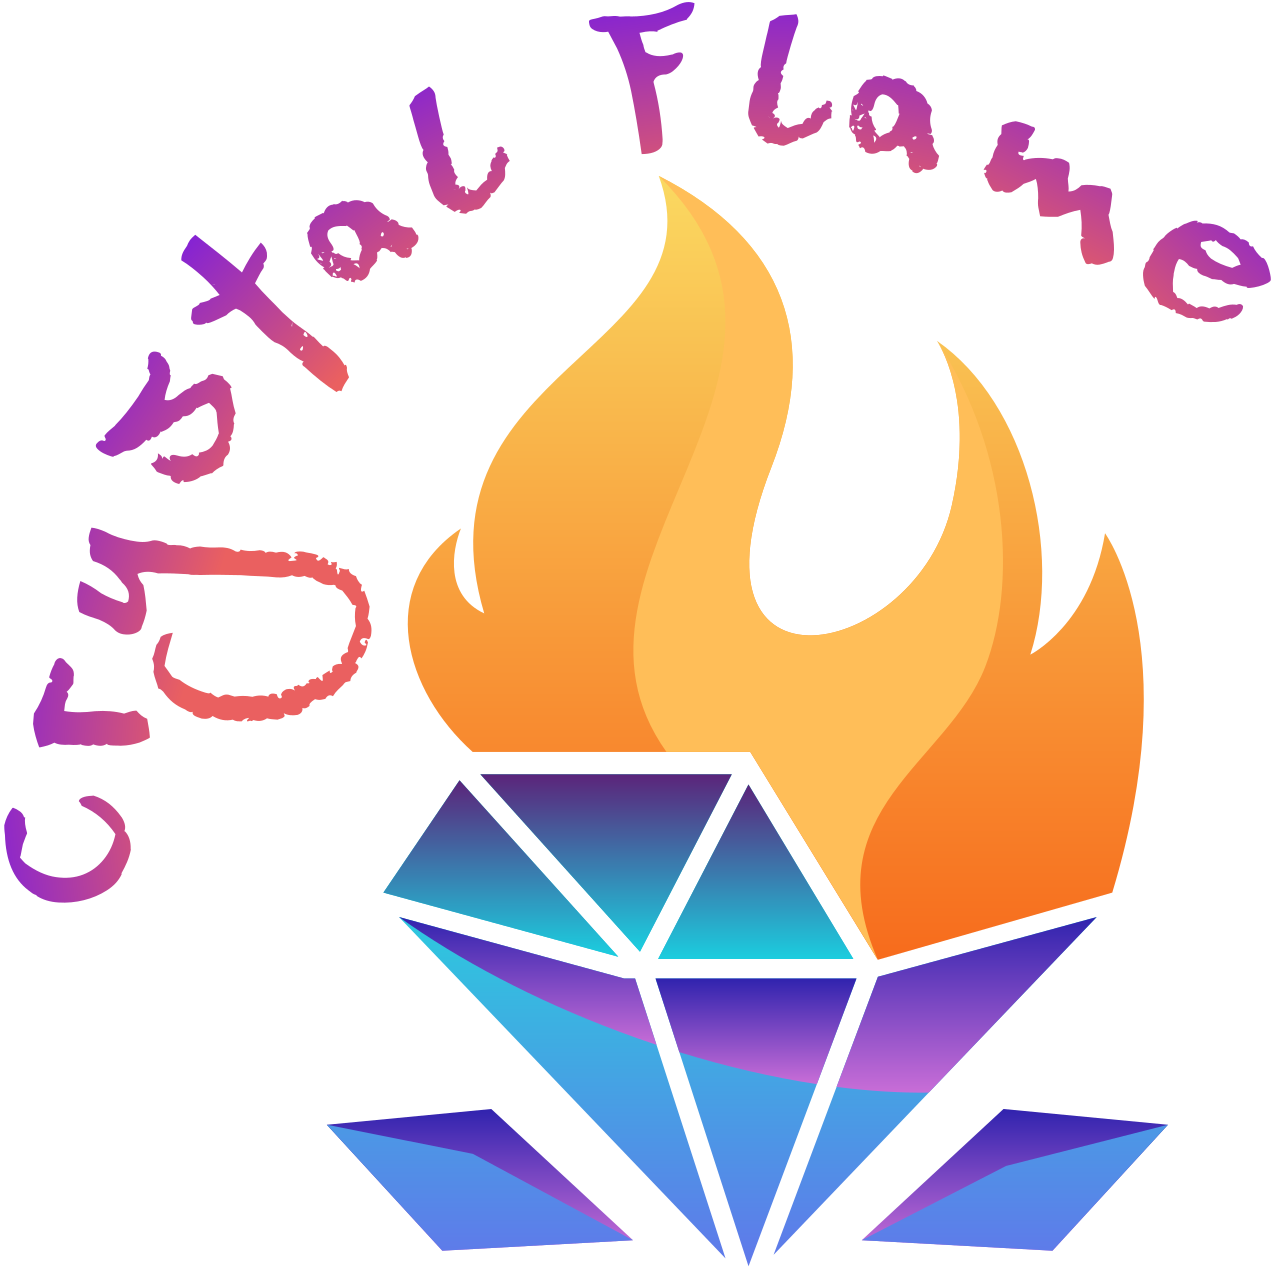 Crystal Flame's logo